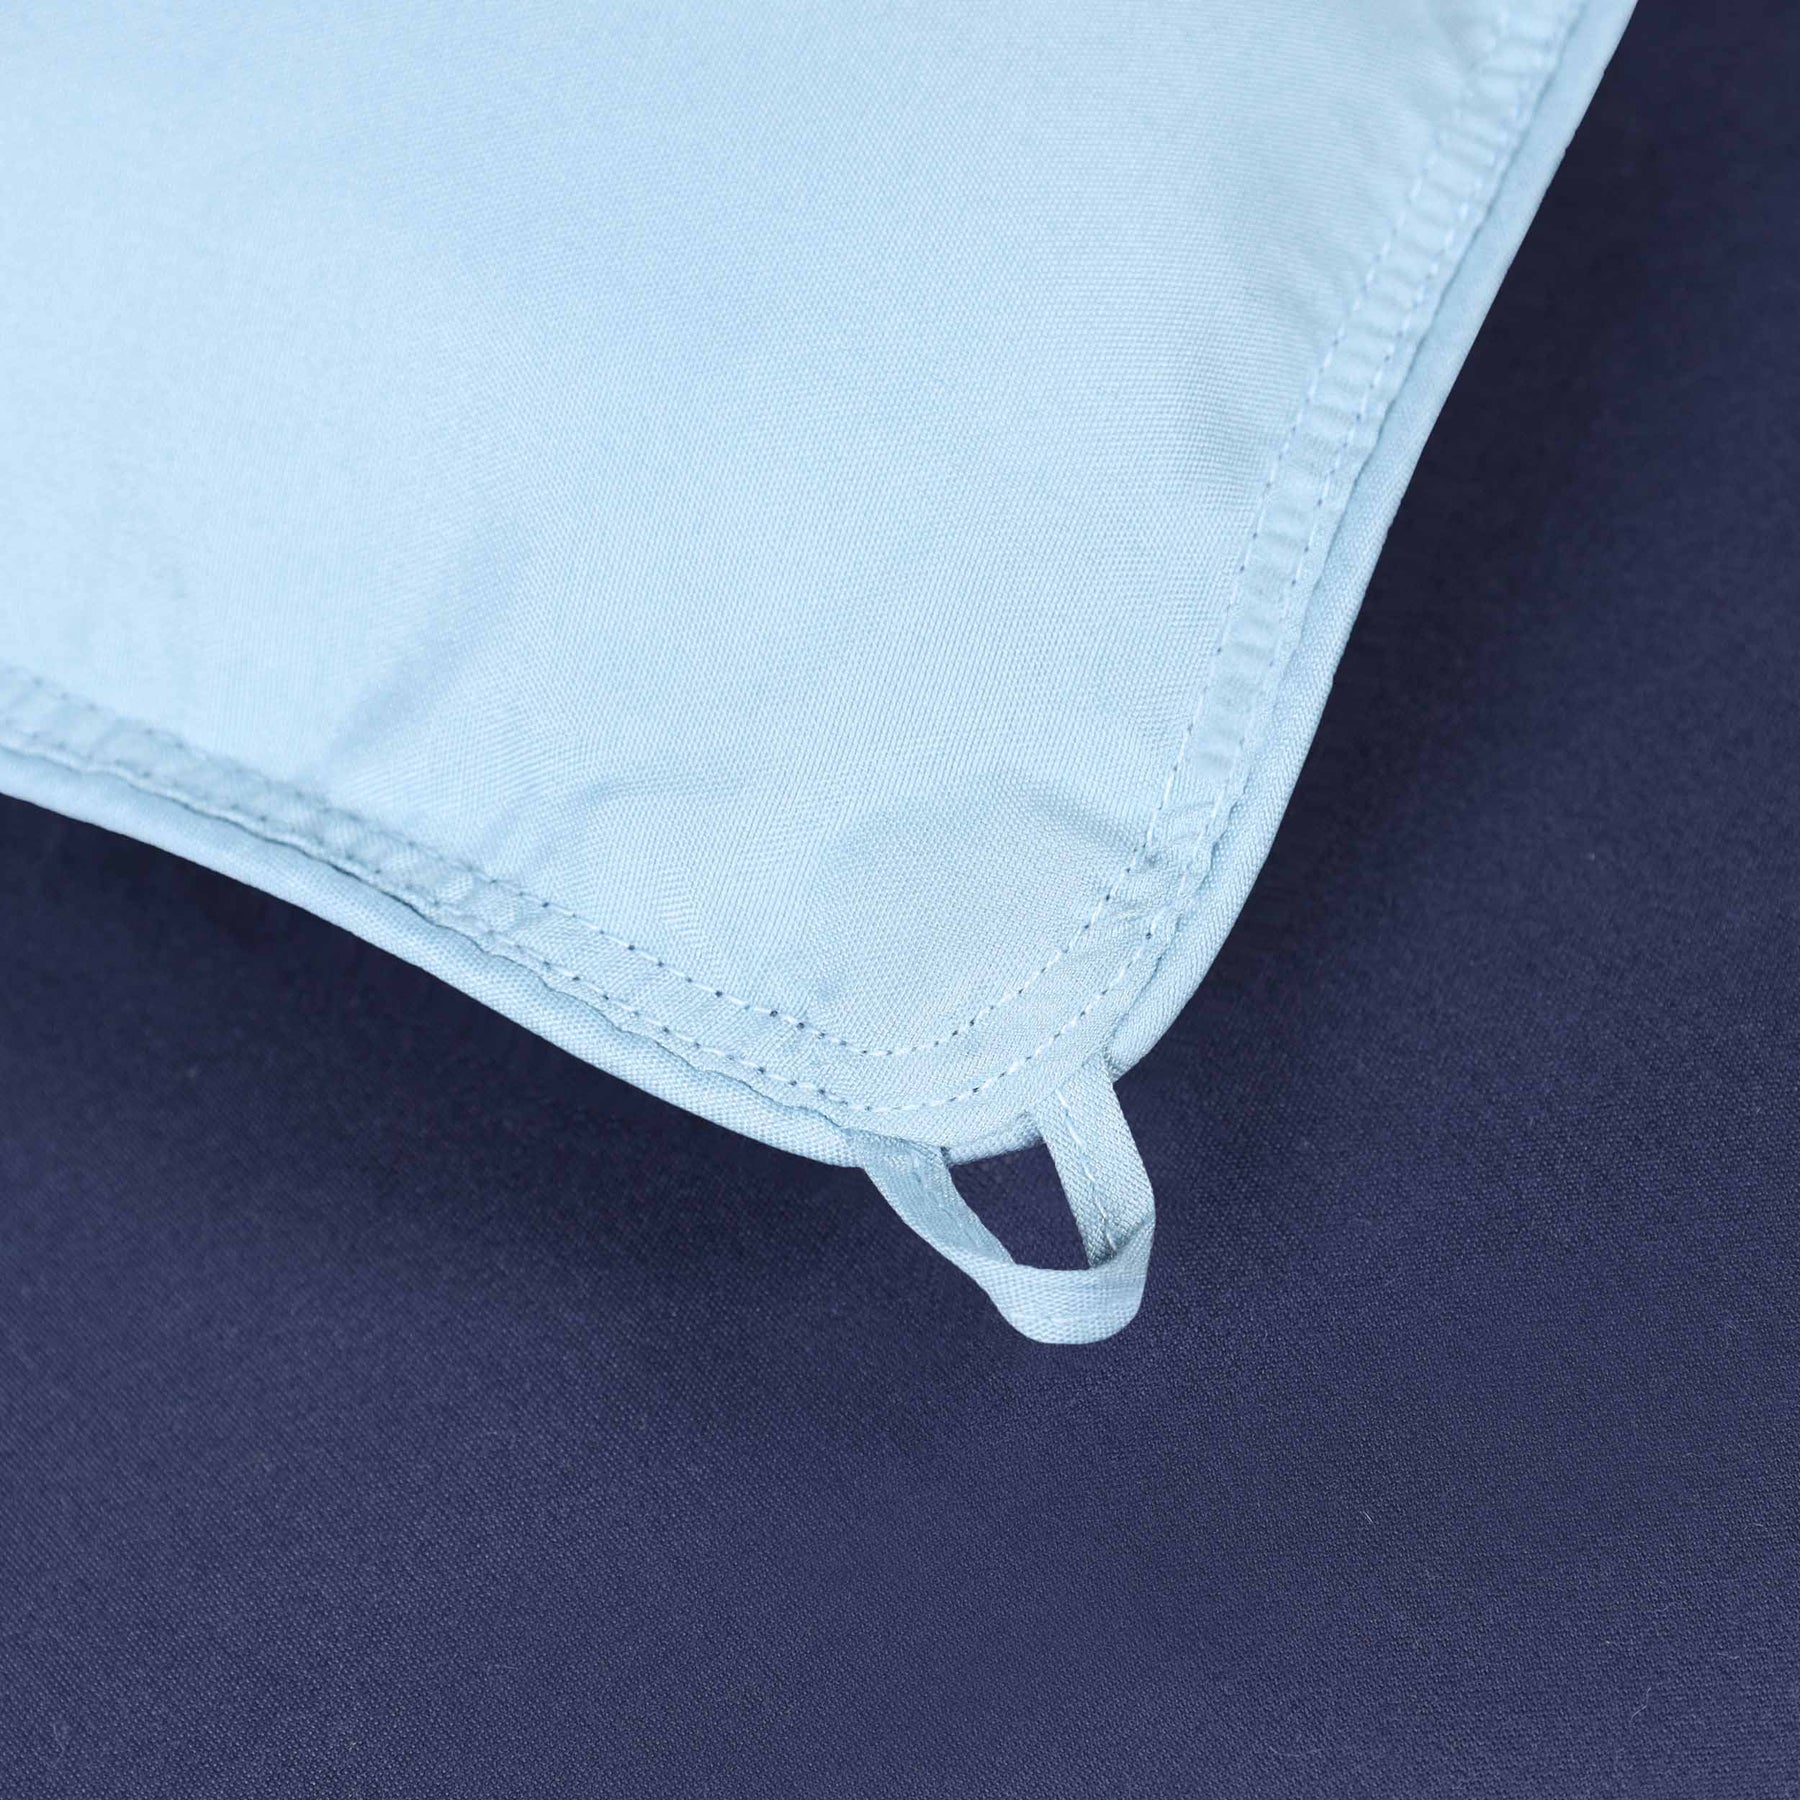 Brushed Microfiber Reversible Down Alternative Comforter - Navy Blue-Light Blue